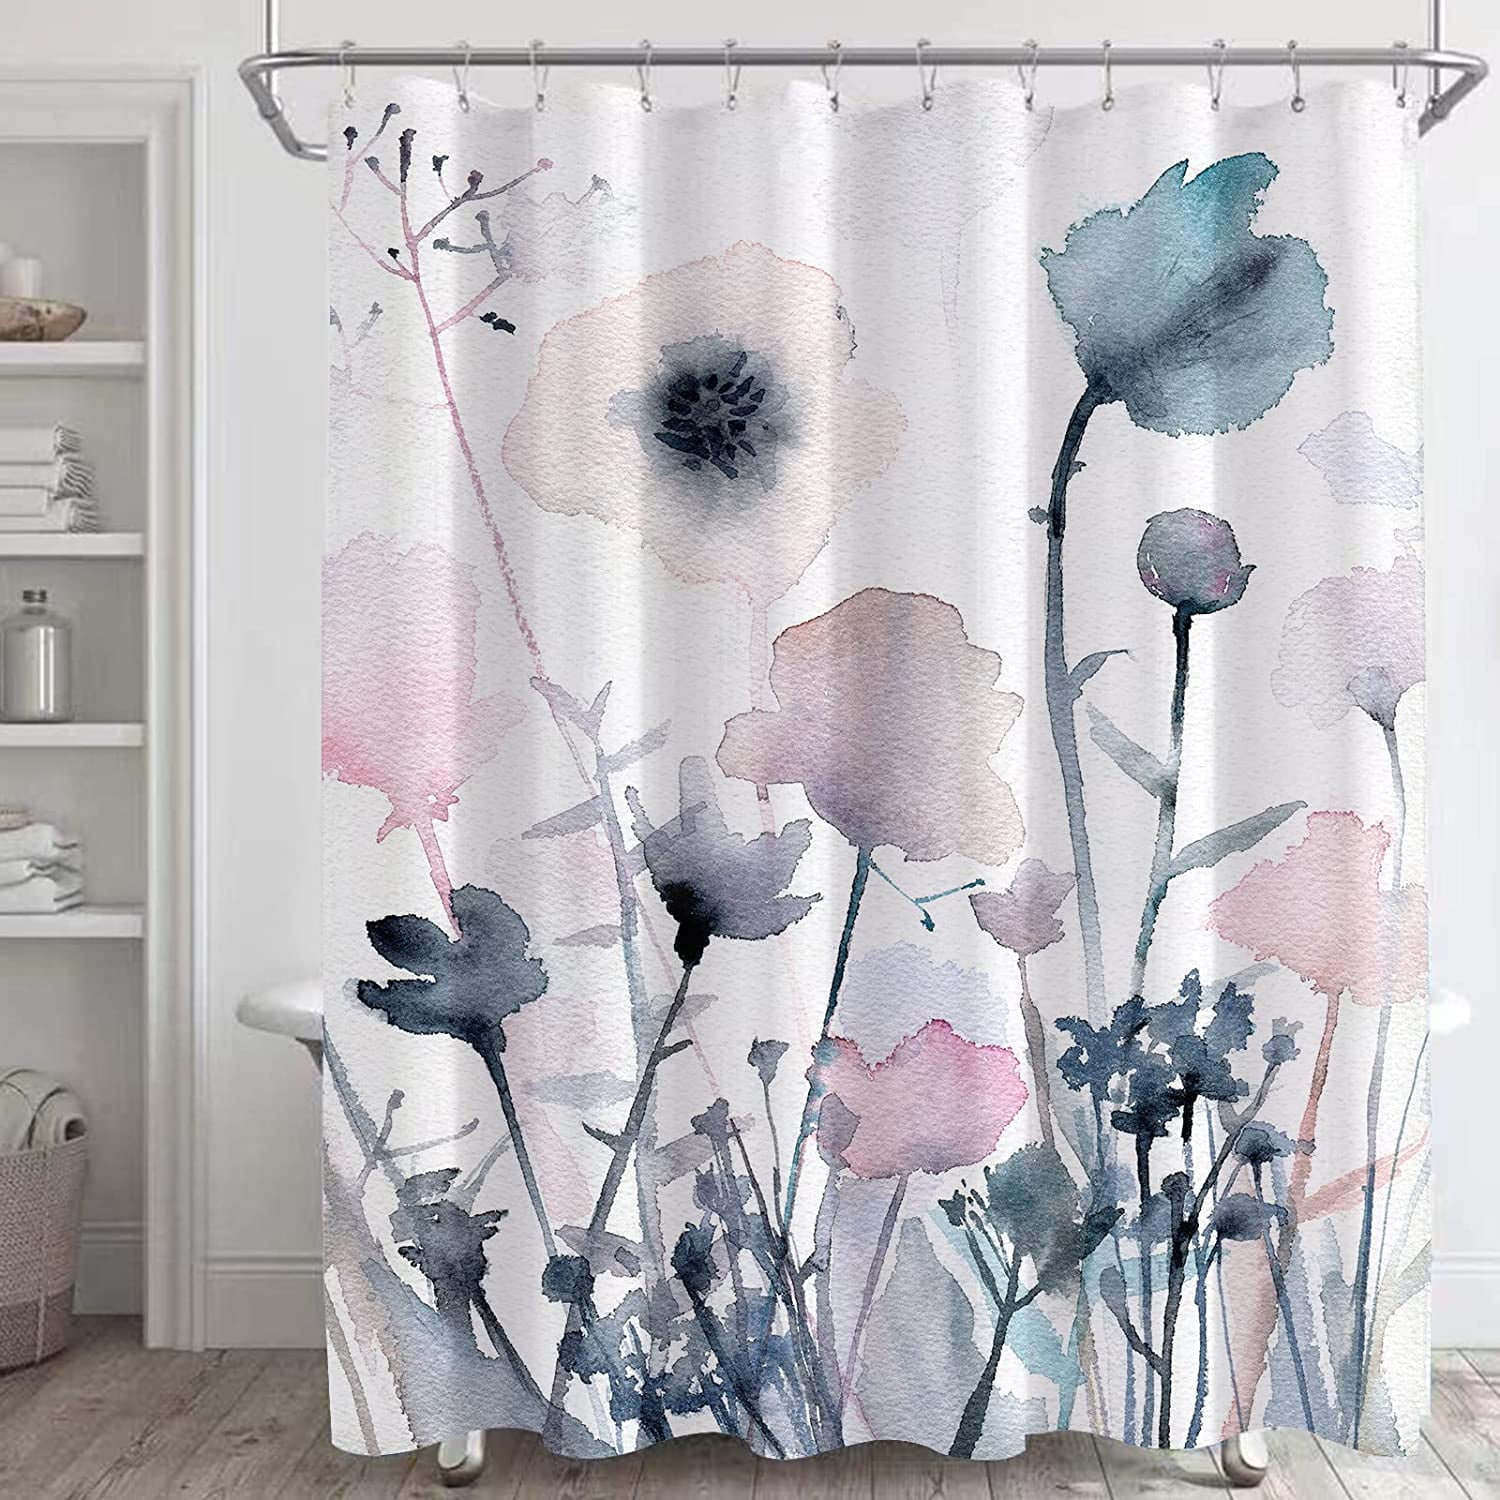 Cartoon Plant, Shower Curtain Hooks 12 Pcs Shower Curtain Rings